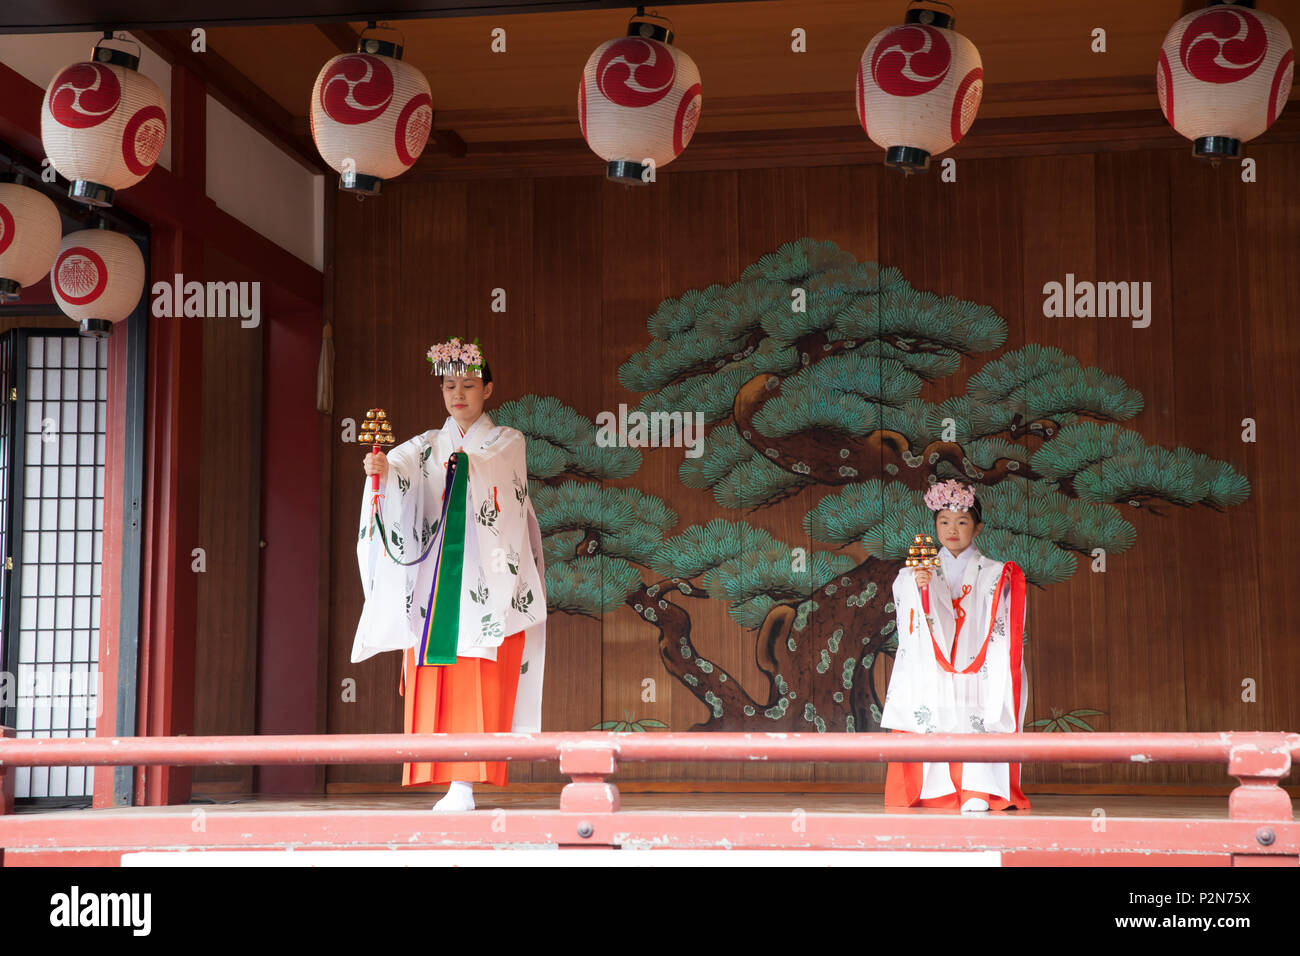 Girl und young woman dancing in traditional costume during Sanja Matsuri in Asakusa, Taito-ku, Tokyo, Japan Stock Photo